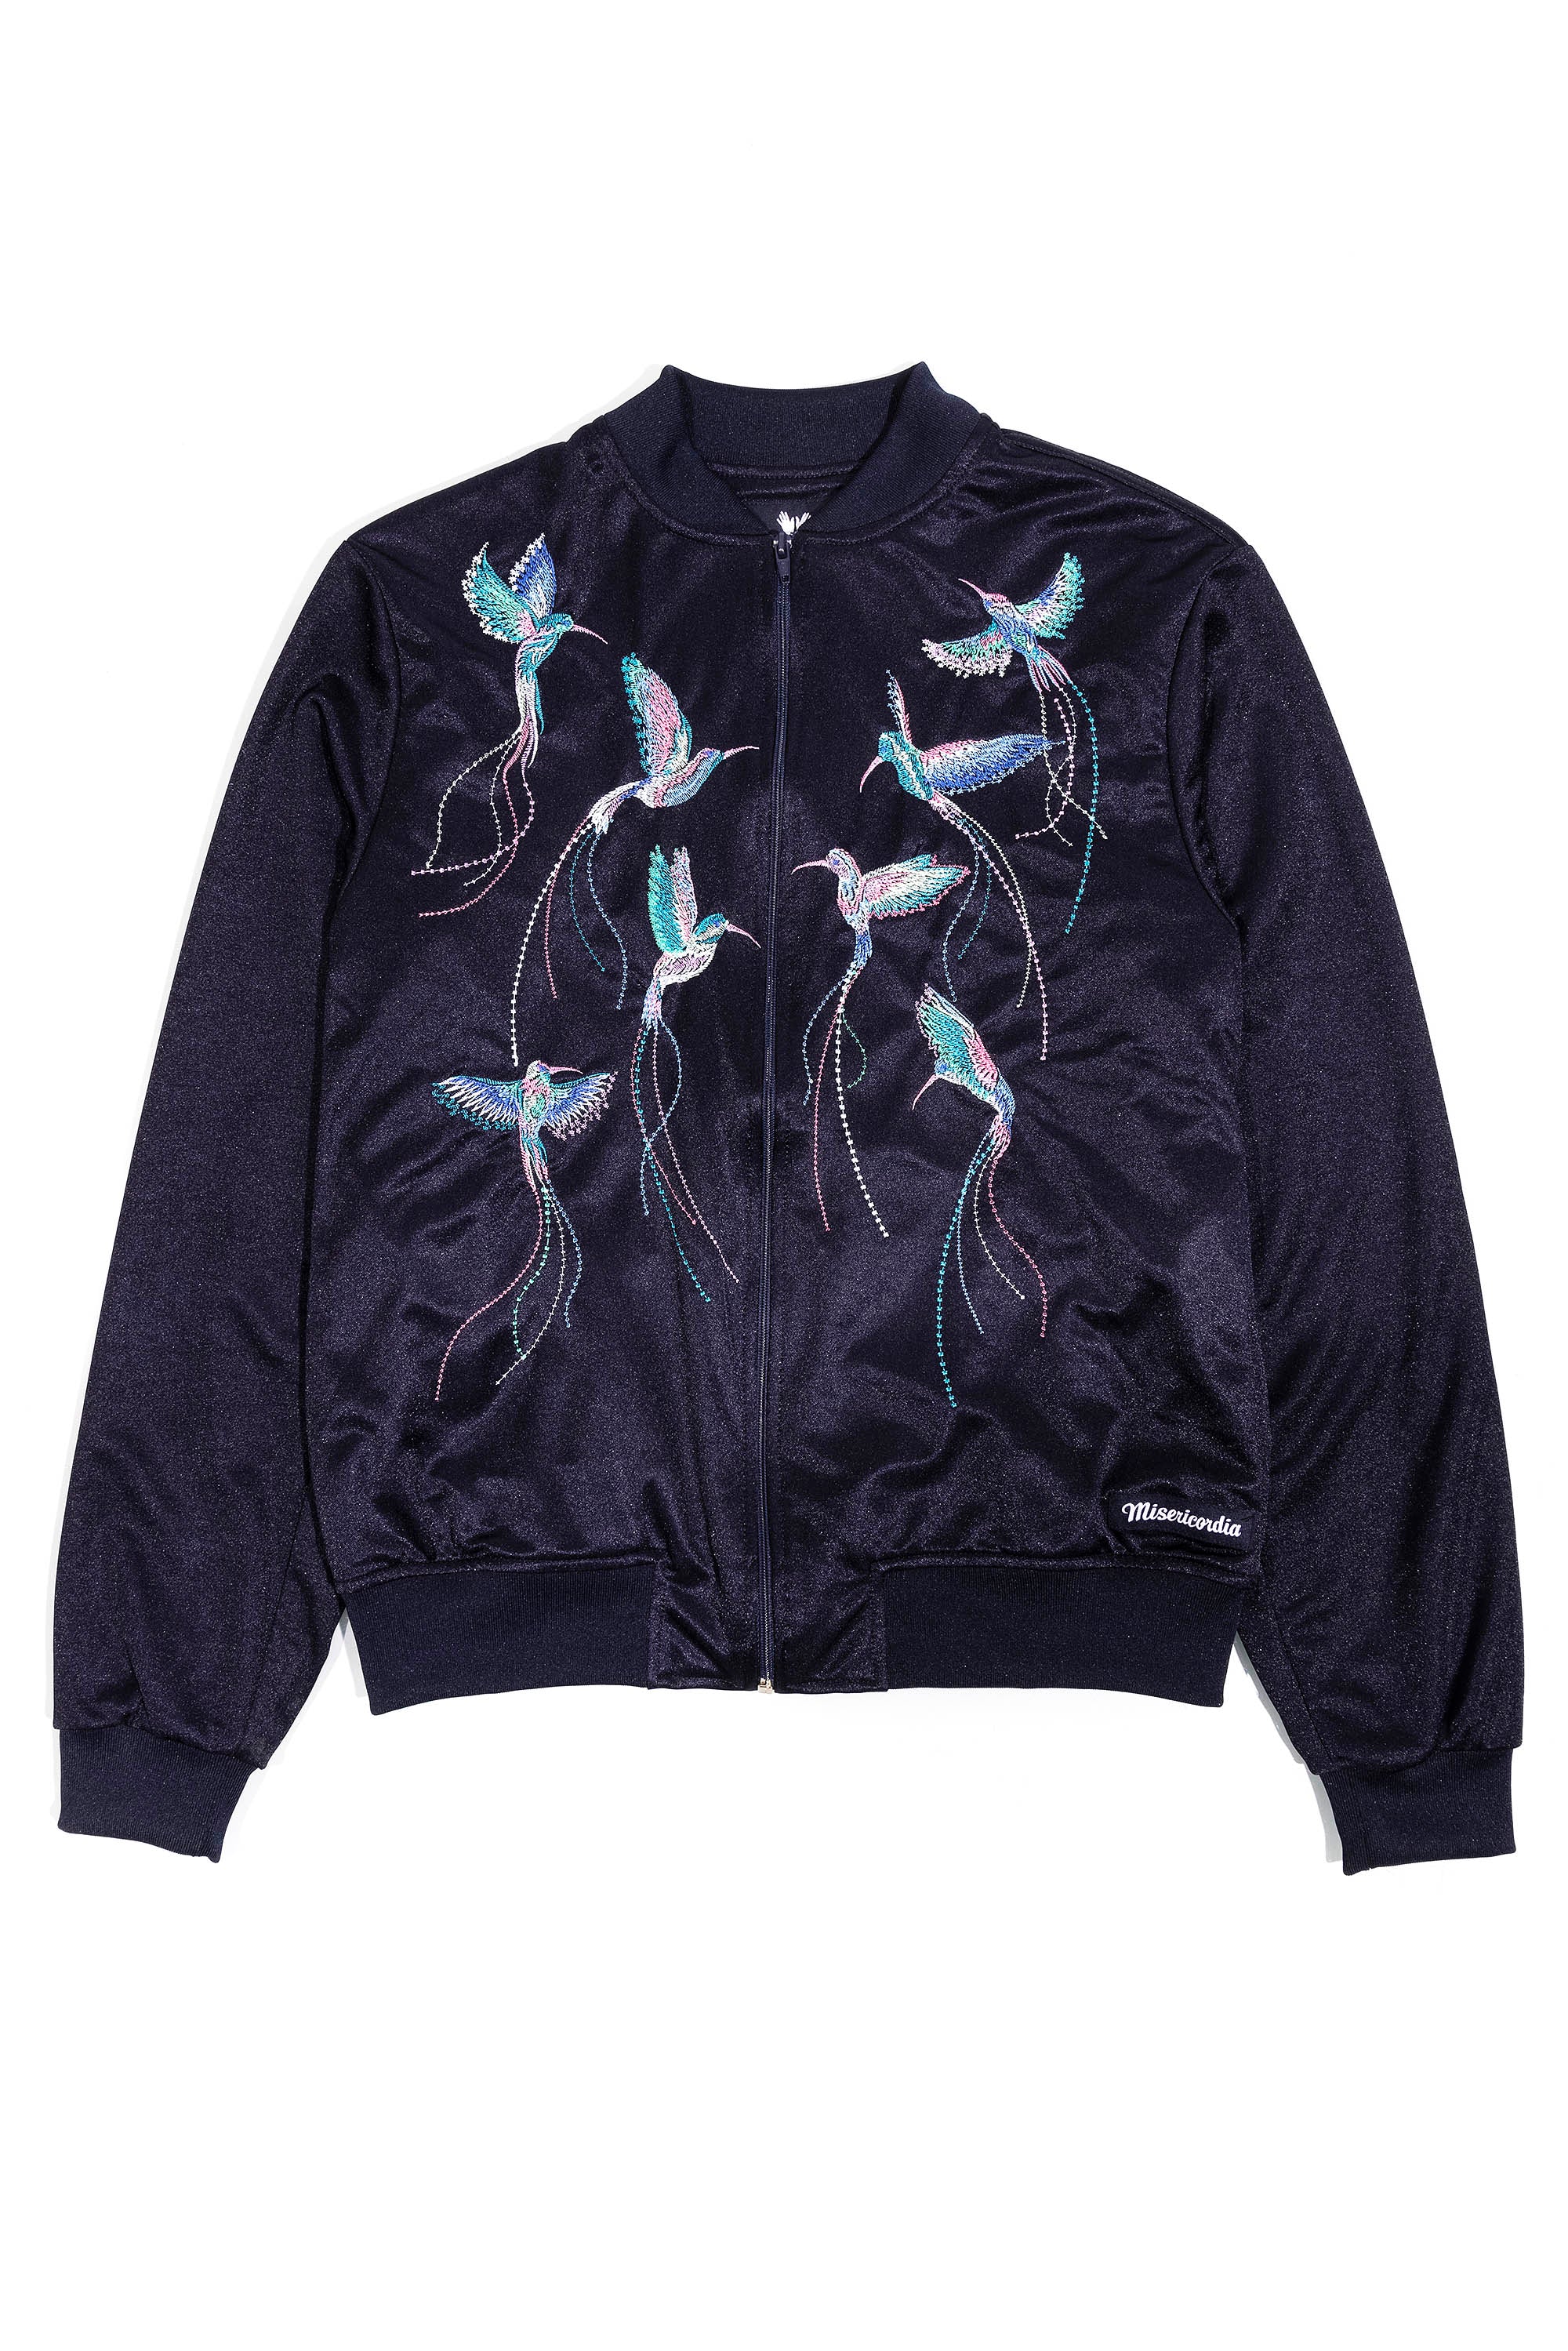 bomber souvenir bleu marine avec broderie colibri au dos détail broderie